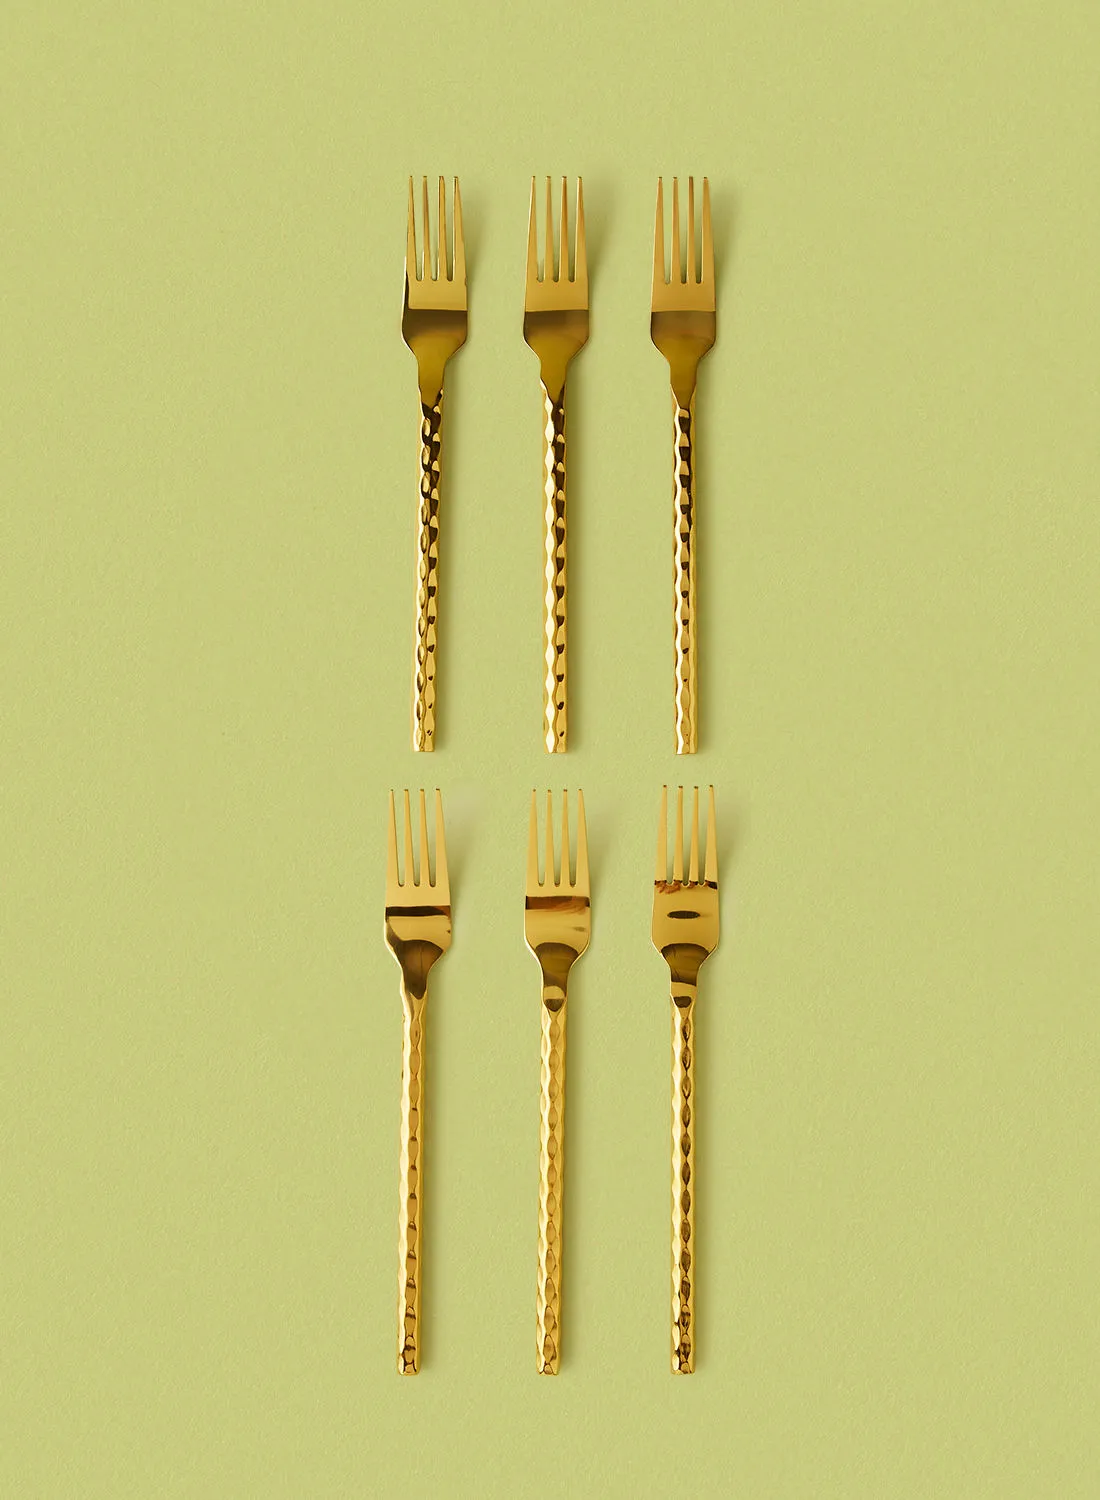 noon east 6 Piece Forks Set - Made Of Stainless Steel - Silverware Flatware - Fork Set - Serves 6 - Design Gold Bamboo